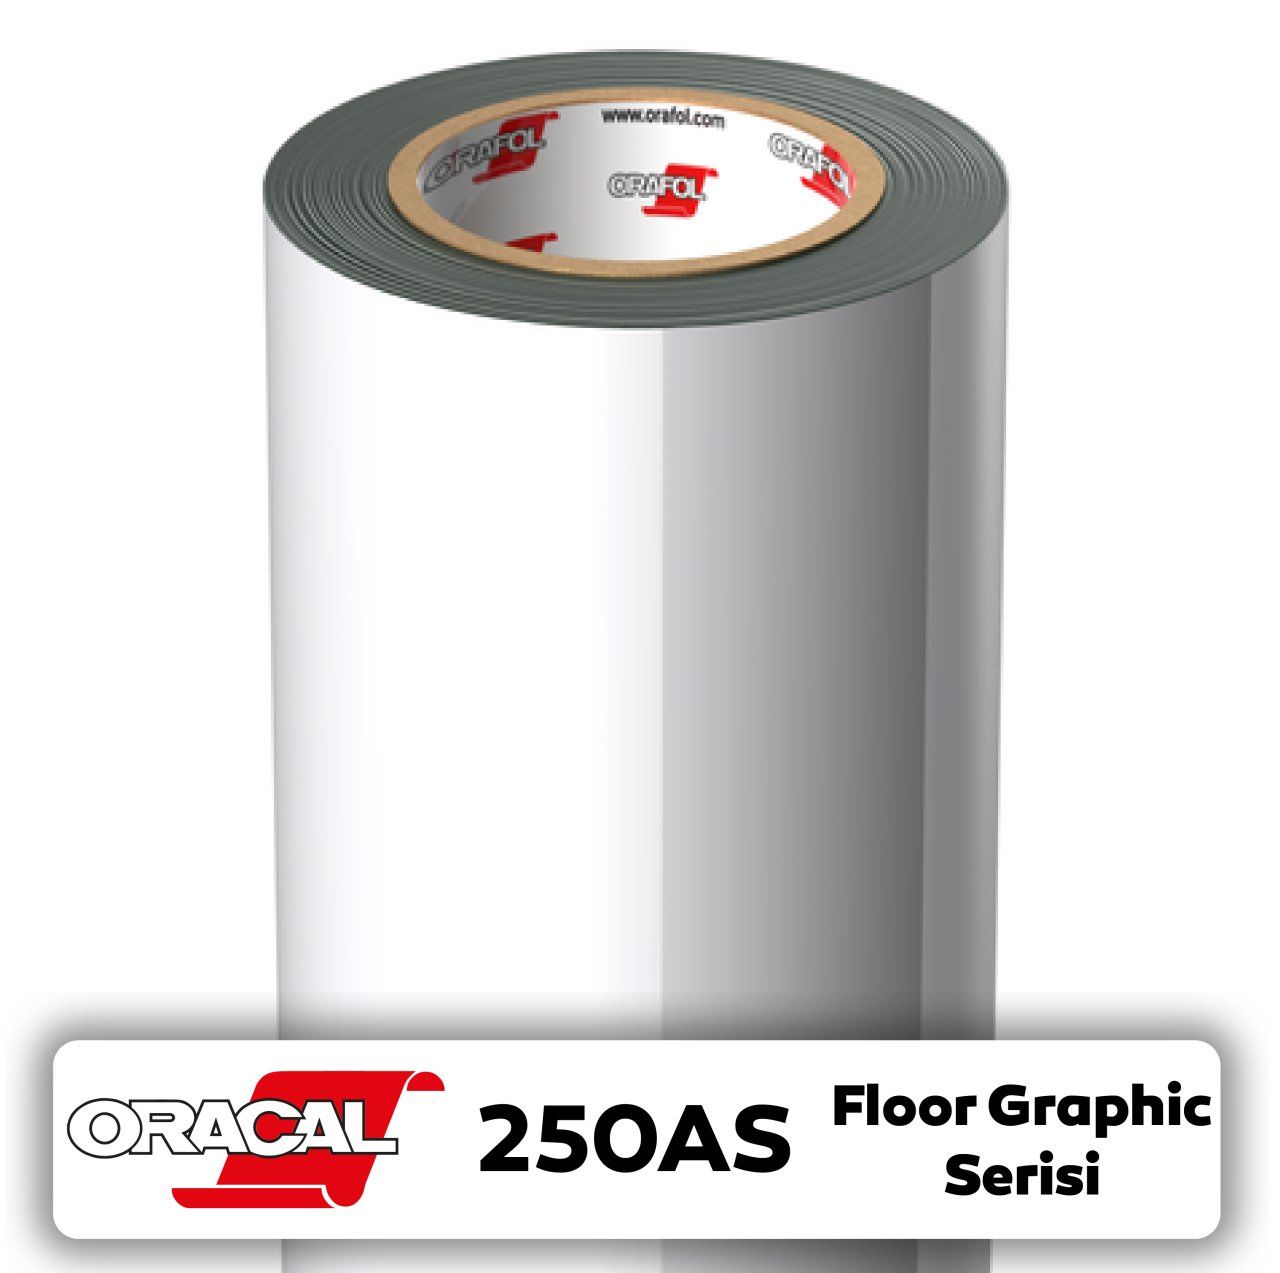 Oracal 250AS (Floor Graphics Serisi)